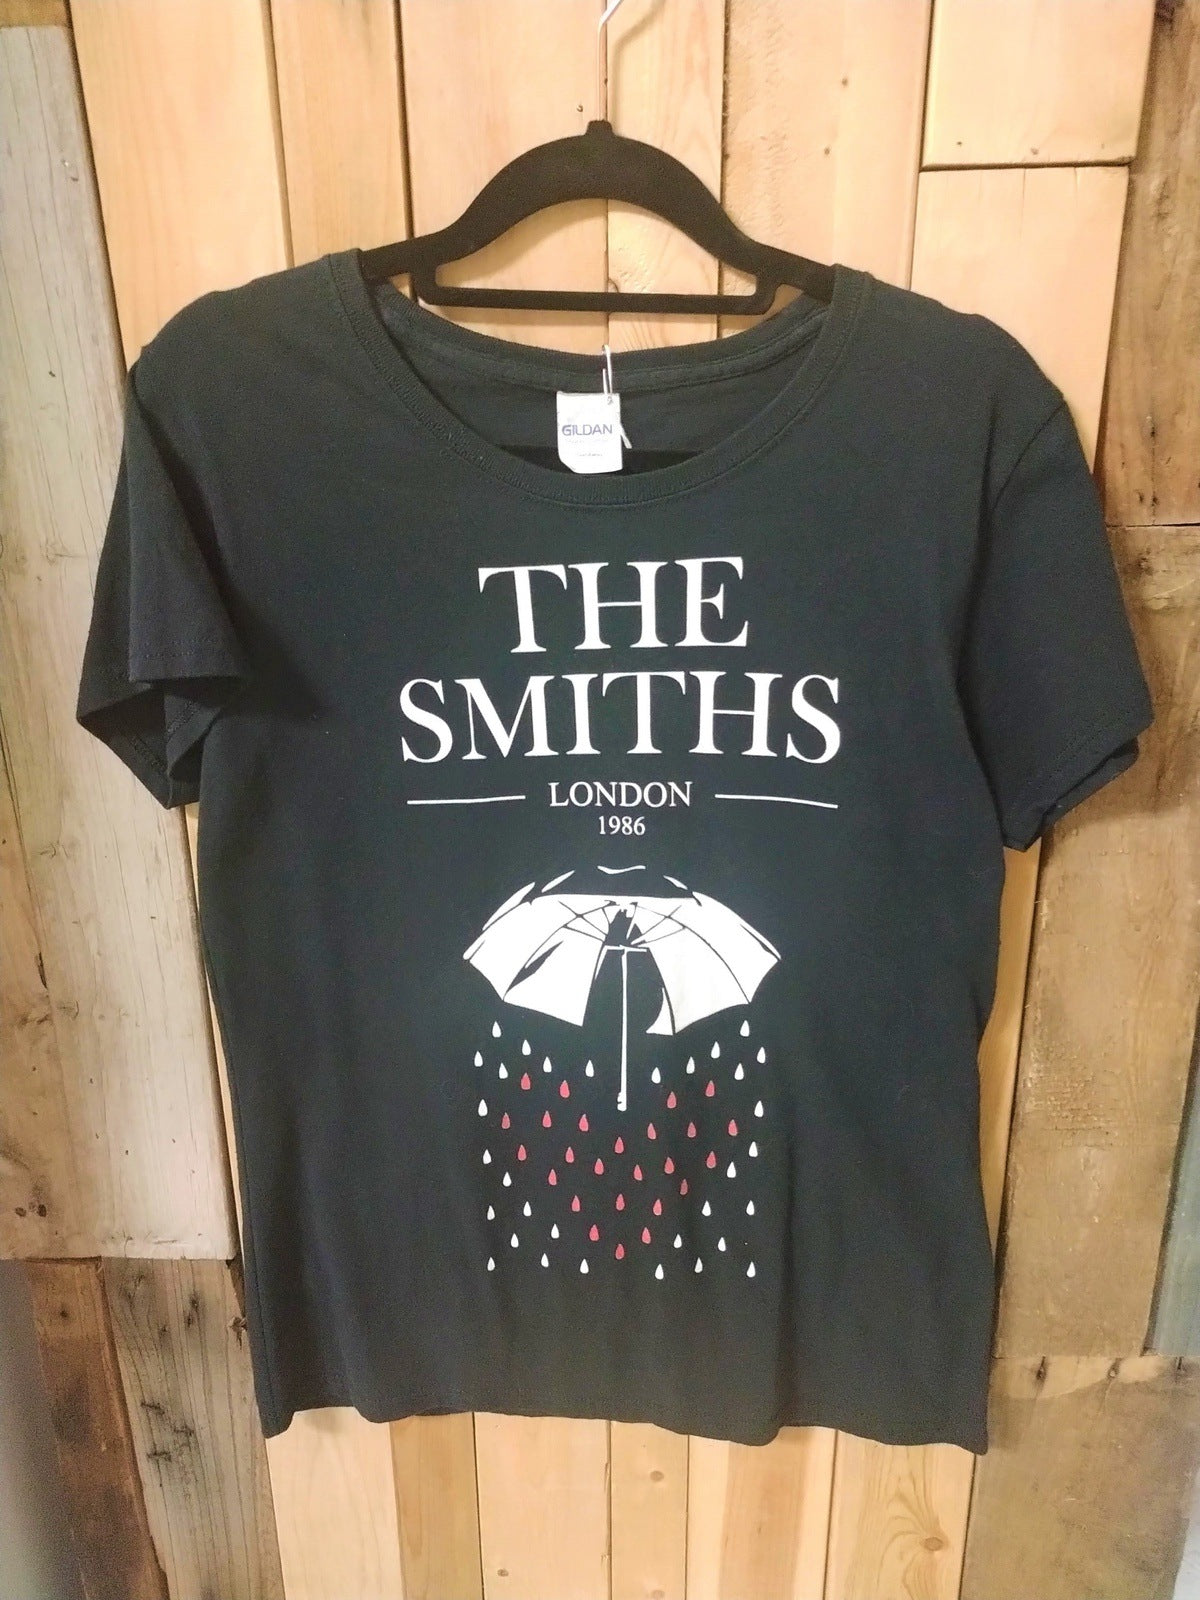 The Smiths Tee Shirt Size Medium